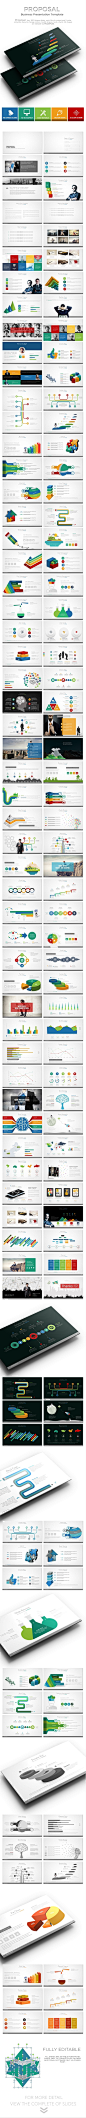 Proposal - Business Presentation Template | GraphicRiver